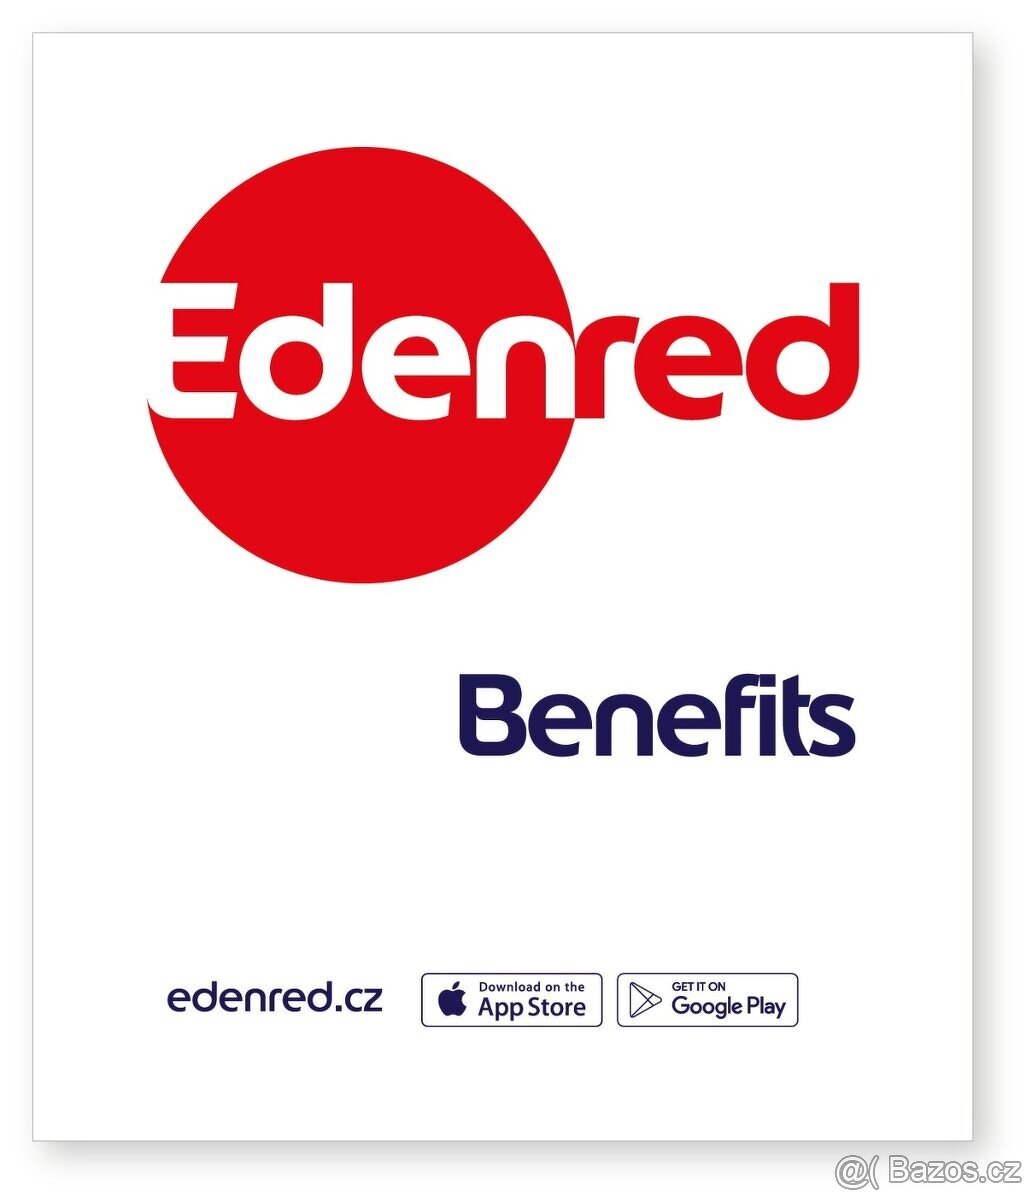 Edenred benefits